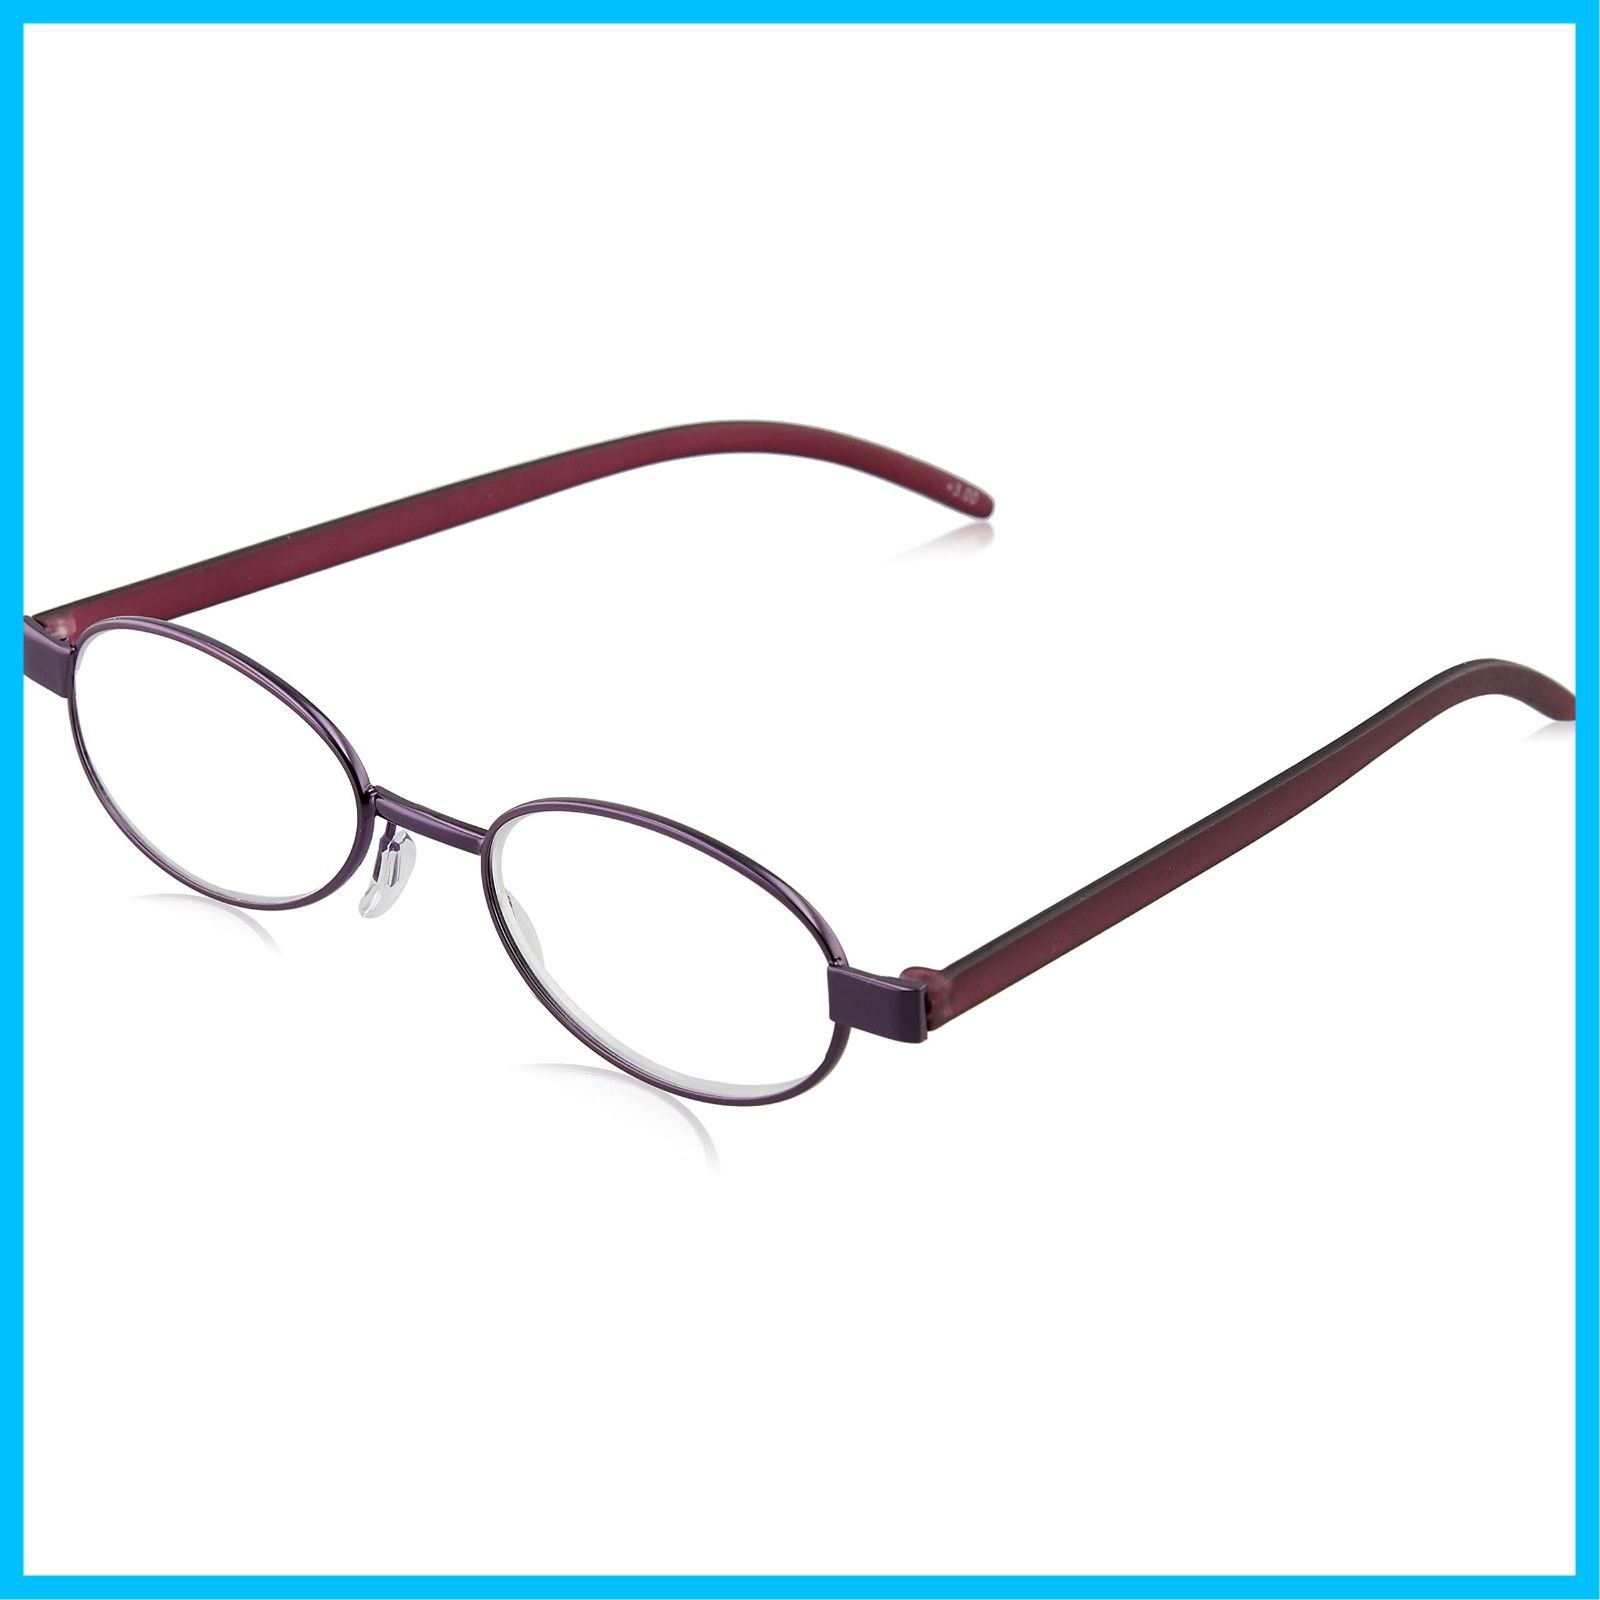 ULTRA Flat READER 超 薄型 軽量 老眼鏡 (専用スリムケース付き) レディーズ パープル +3.00 5624-30